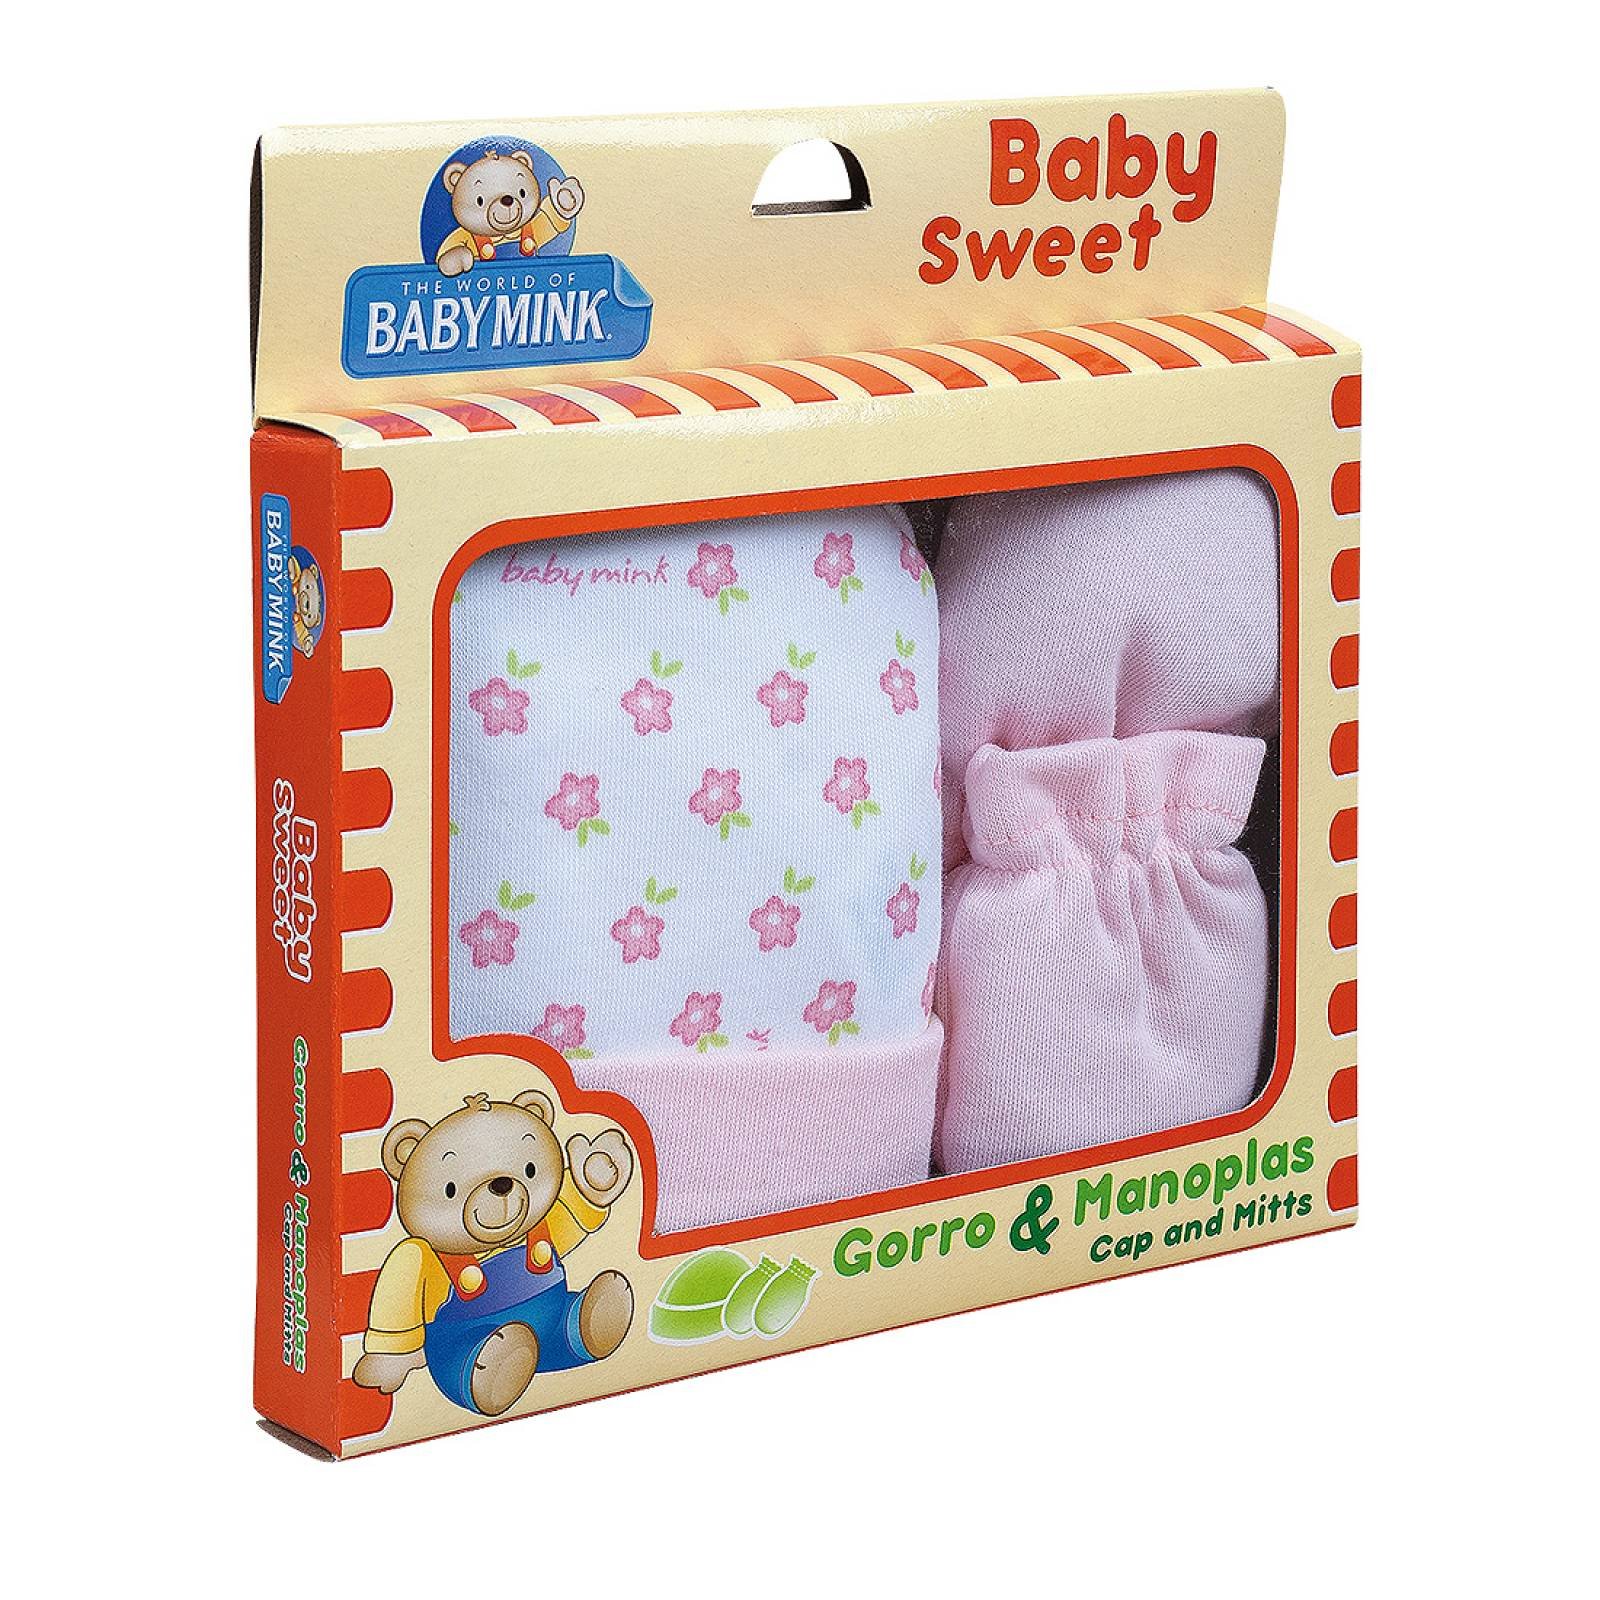 Set Gorro + Manoplas Bebe BabySweet 0-3 meses Baby Mink